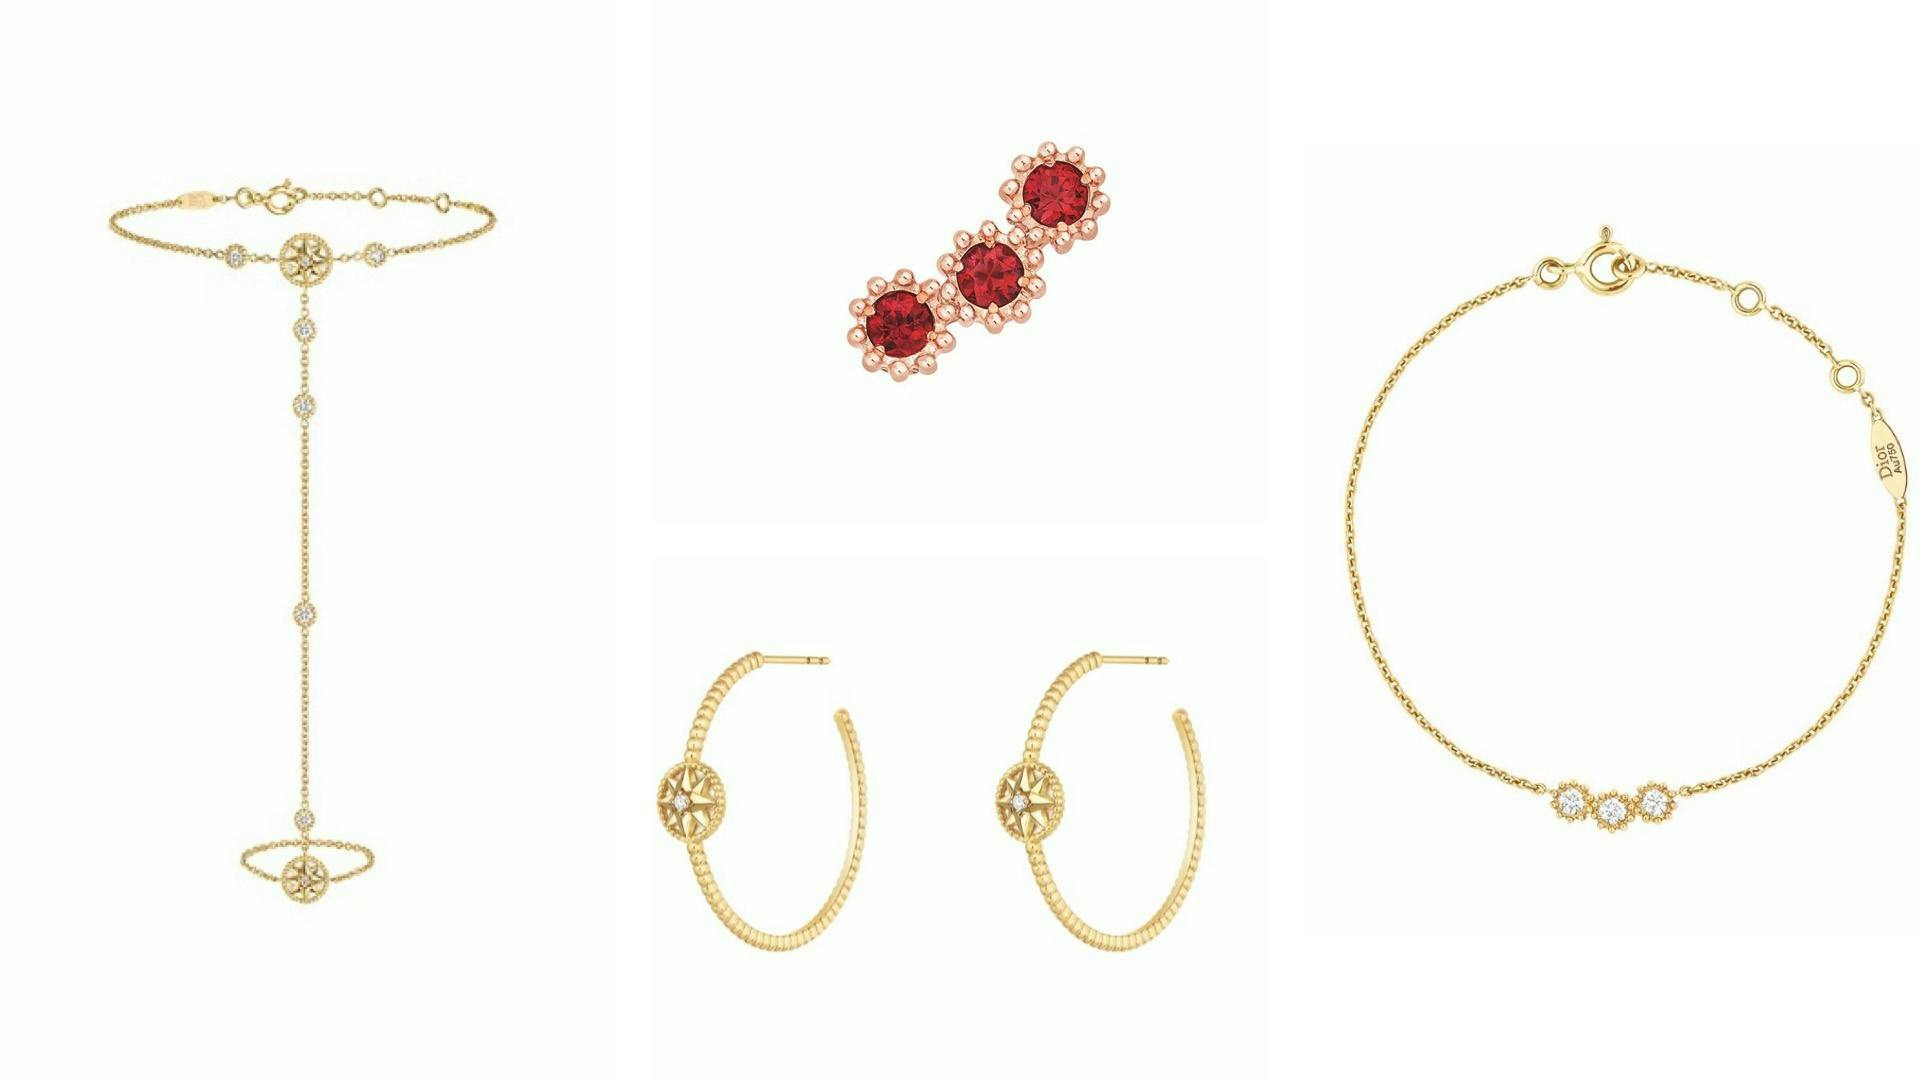 jewelry accessories accessory